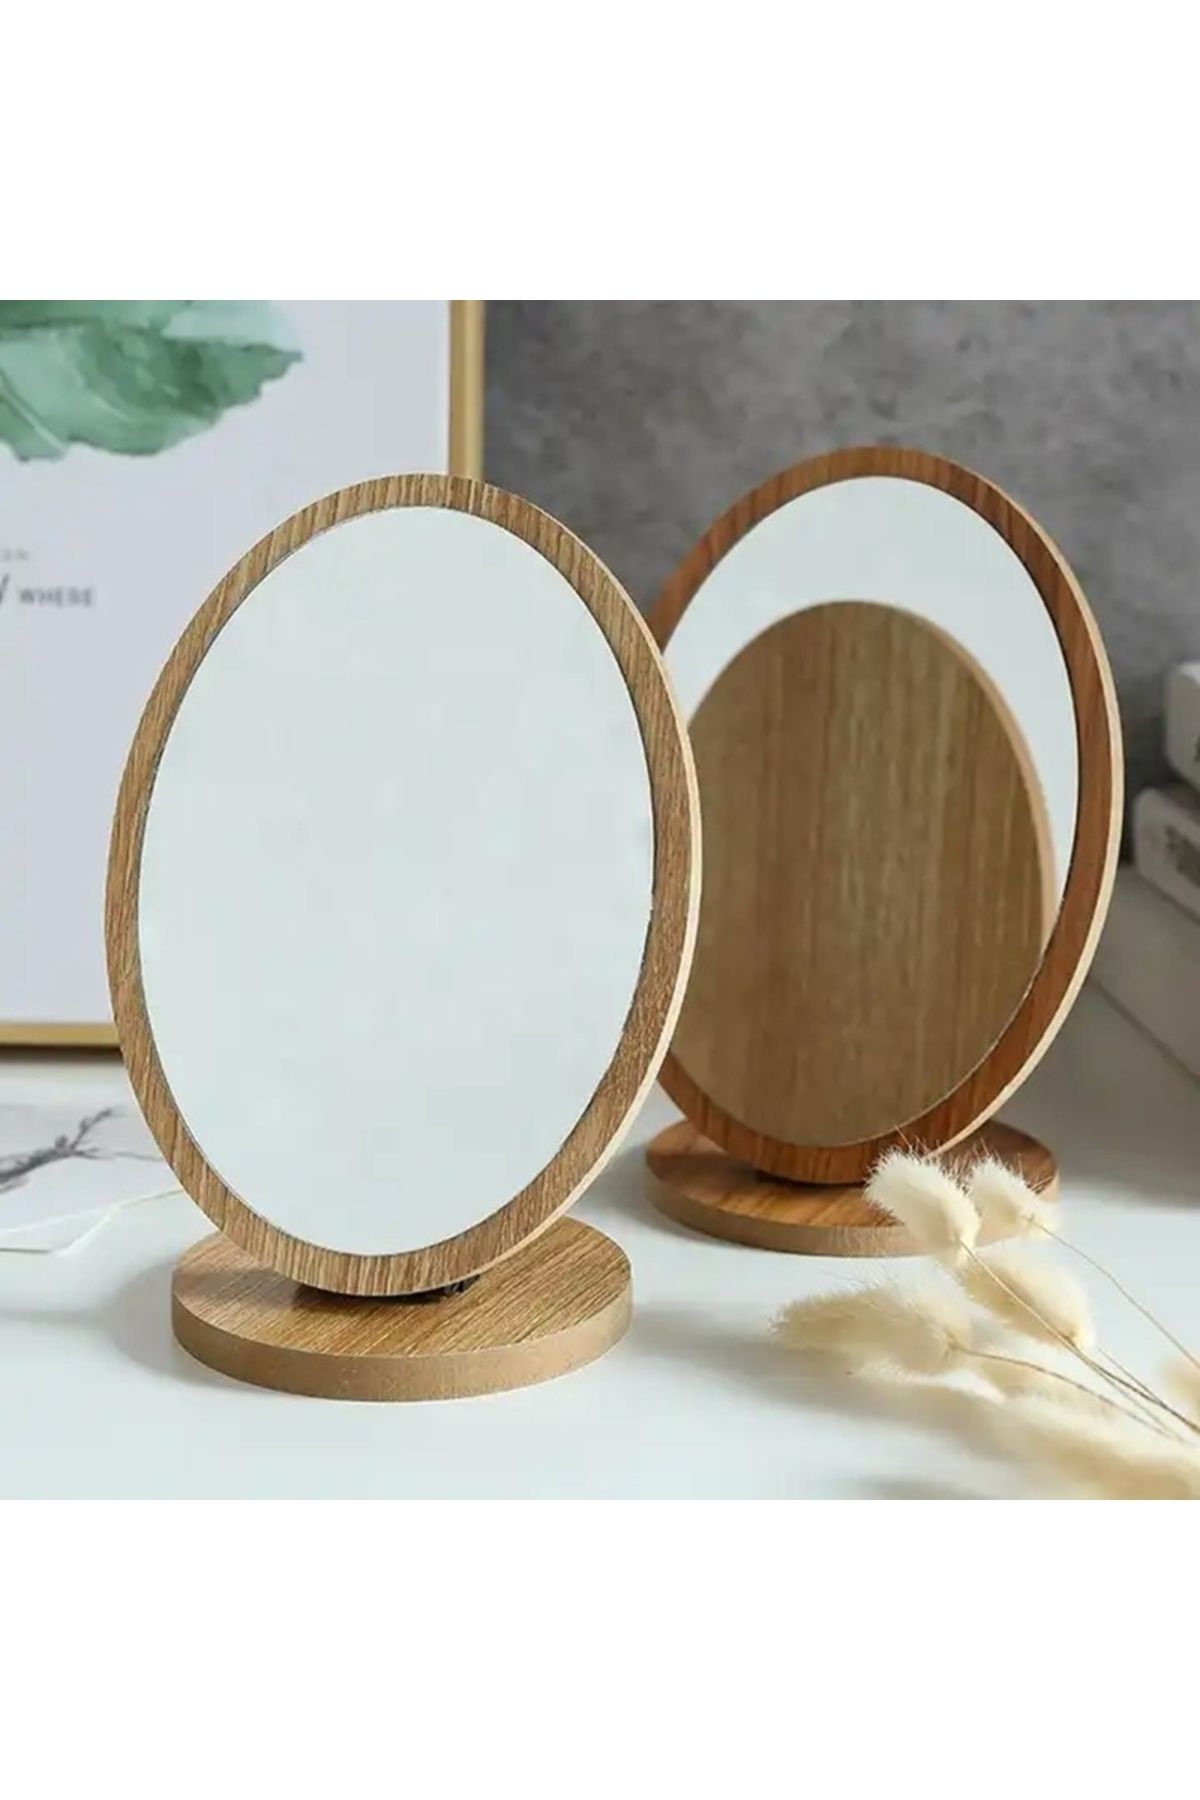 gaman Dekoratif Masa Aynası Makyaj Aynas Açısı Ayarlanabilir Kare Makeup Mirror Ahşap Ayna Oval MD: 2